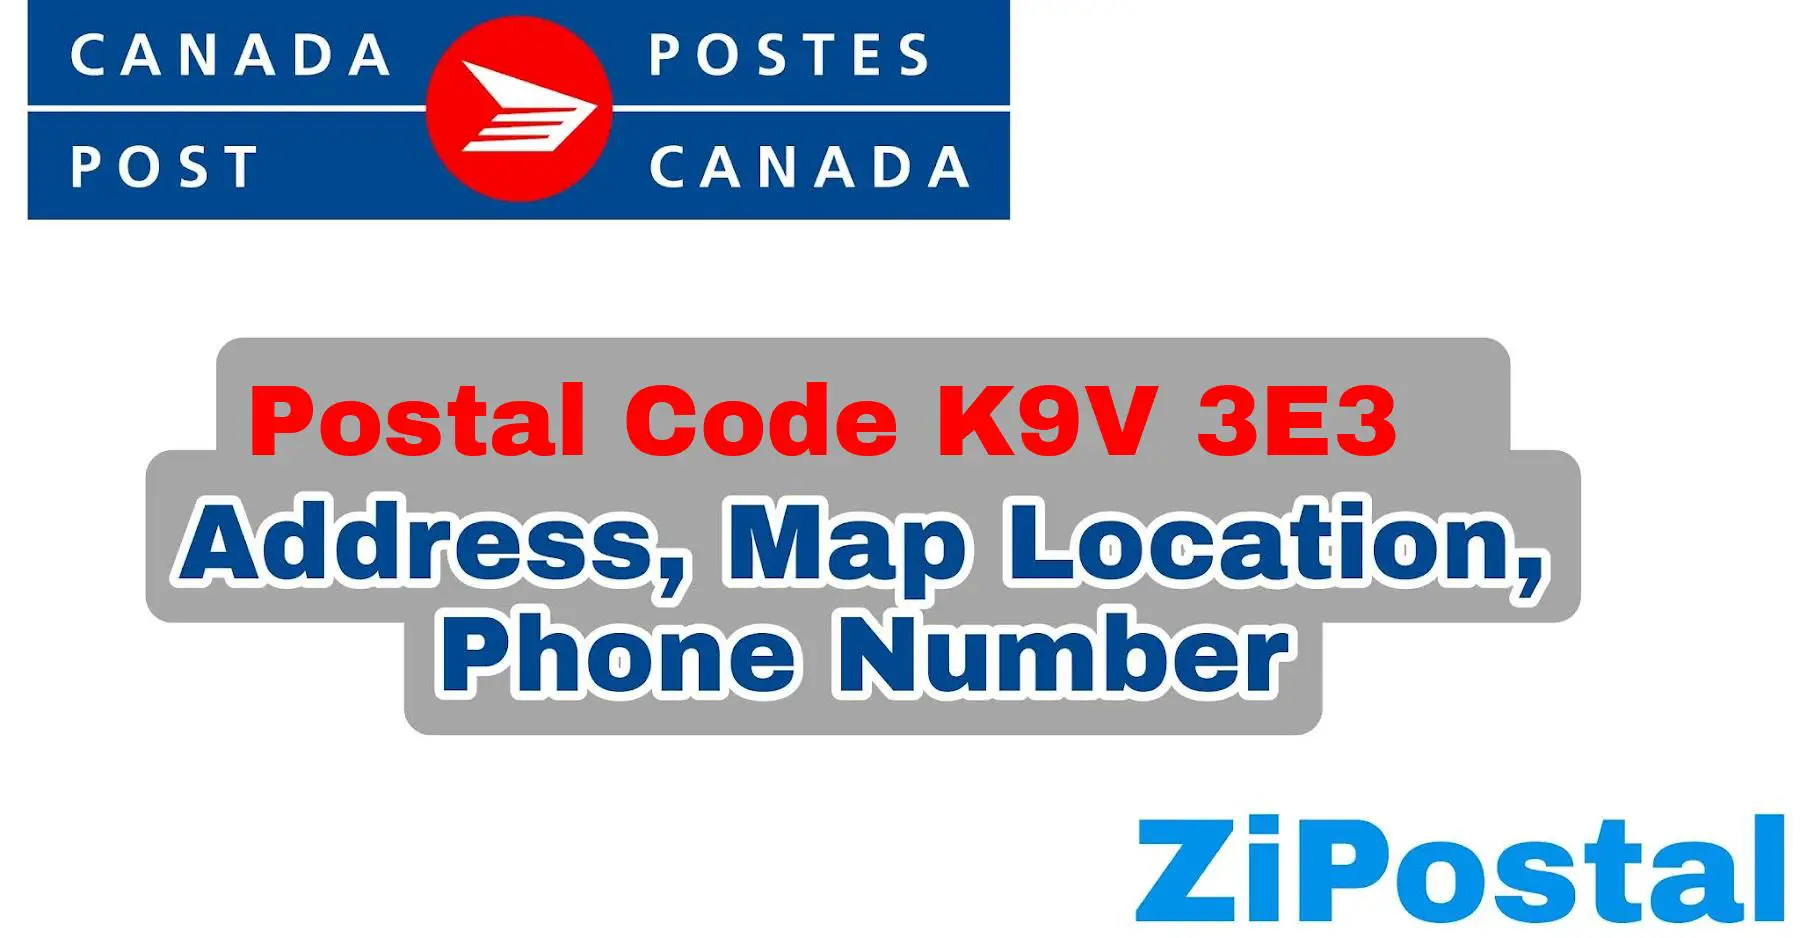 Postal Code K9V 3E3 Address Map Location and Phone Number